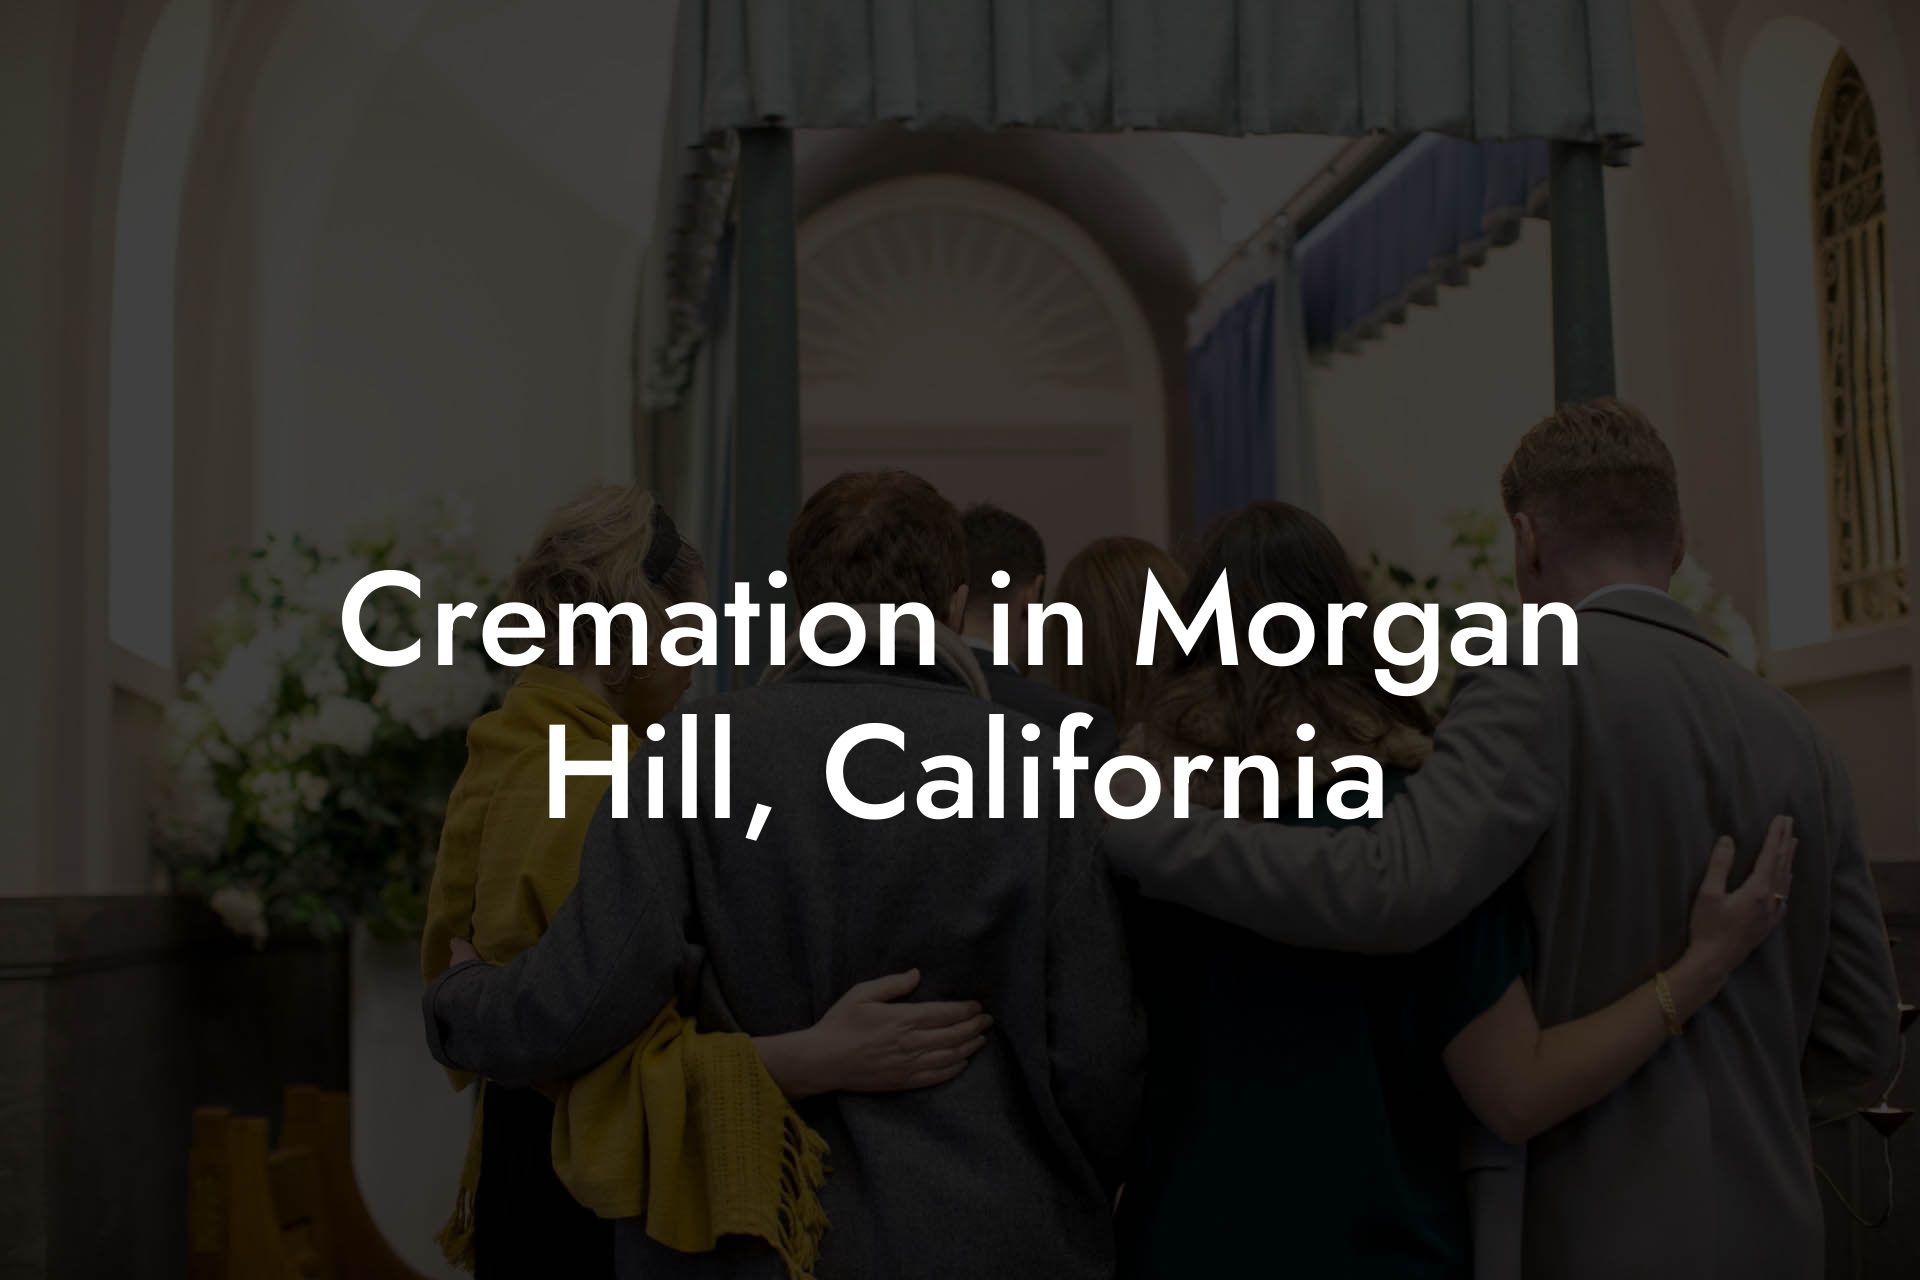 Cremation in Morgan Hill, California